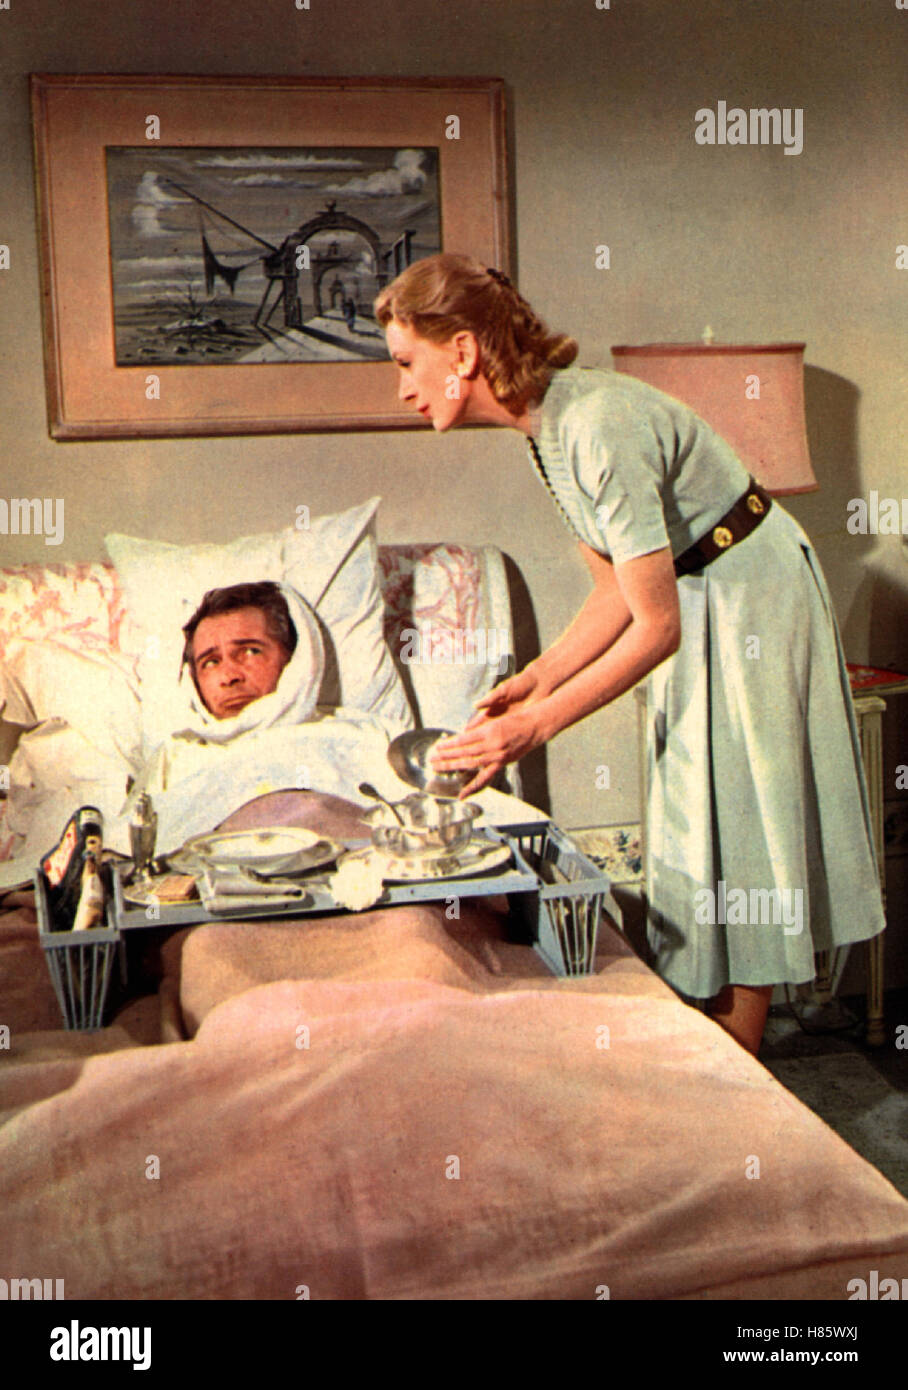 Französische Betten, (COUNT YOUR BLESSINGS) USA 1959, Regie: Jean Negulesco, ROSSANO BRAZZI, DEBORAH KERR, Stichwort: Krankenbett, Kranker, Masern Stock Photo